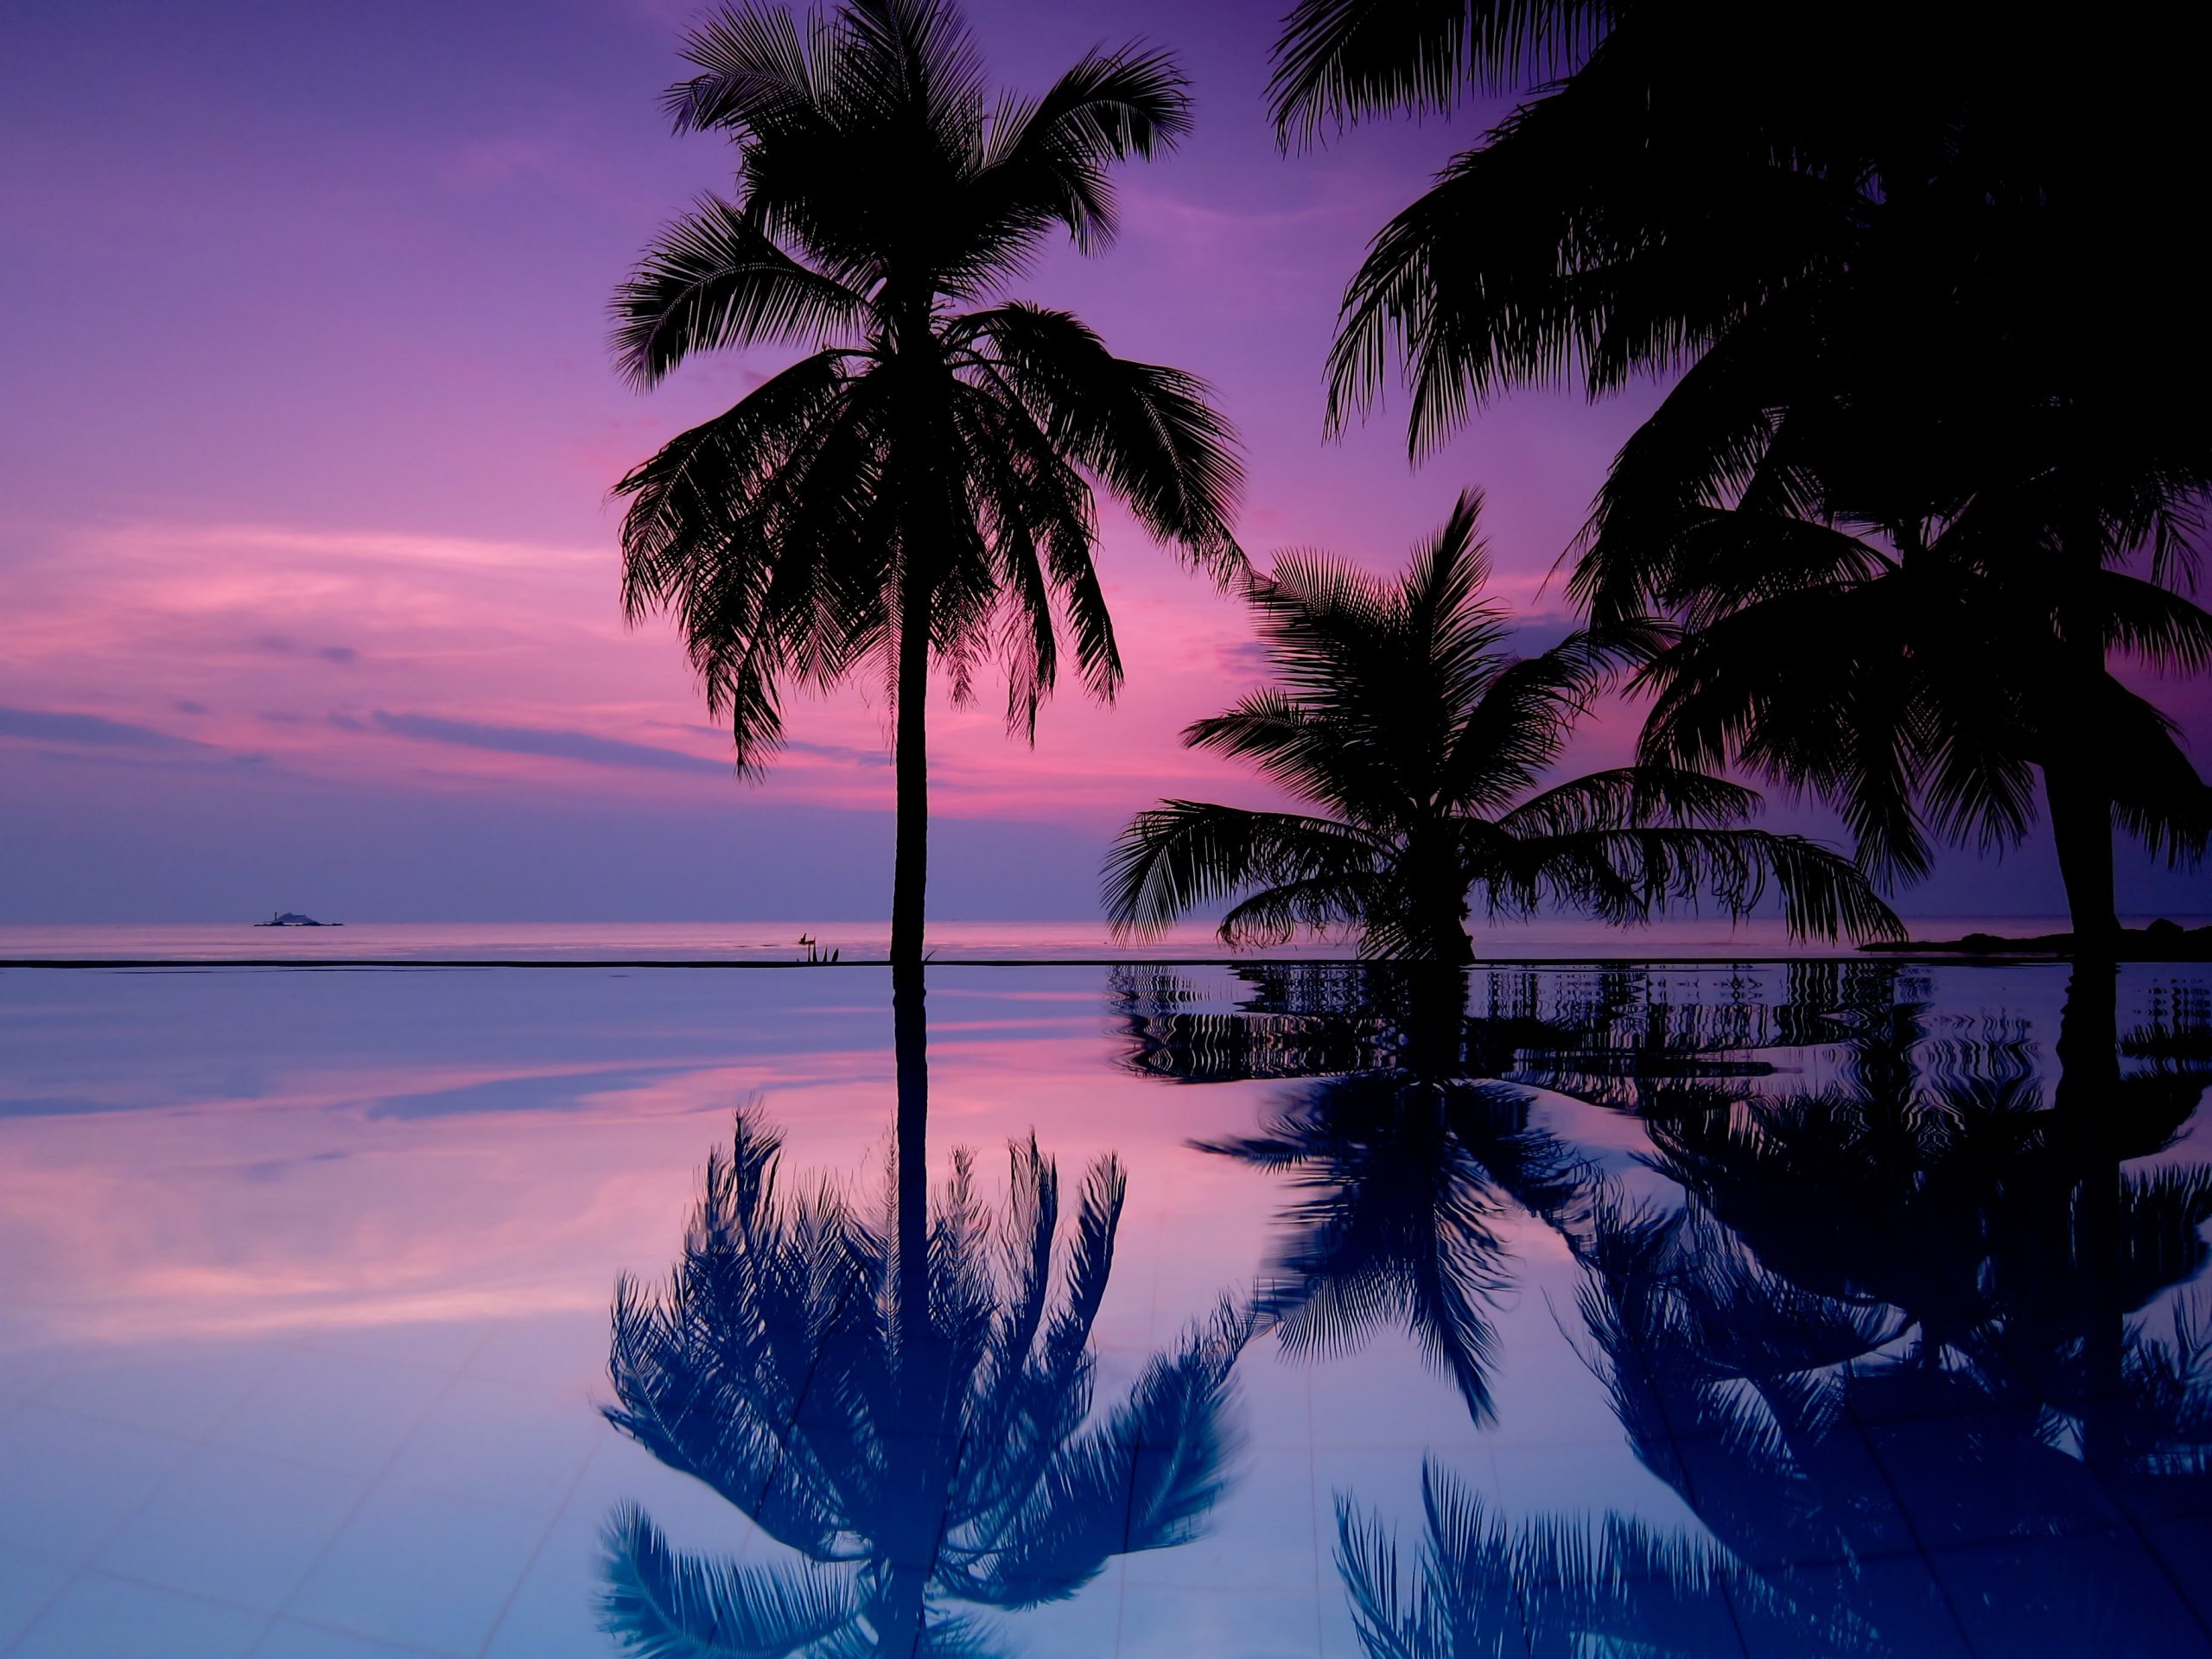 Landscape, tropical, purple sky, palm trees, sea, water, tropical climate wallpaper